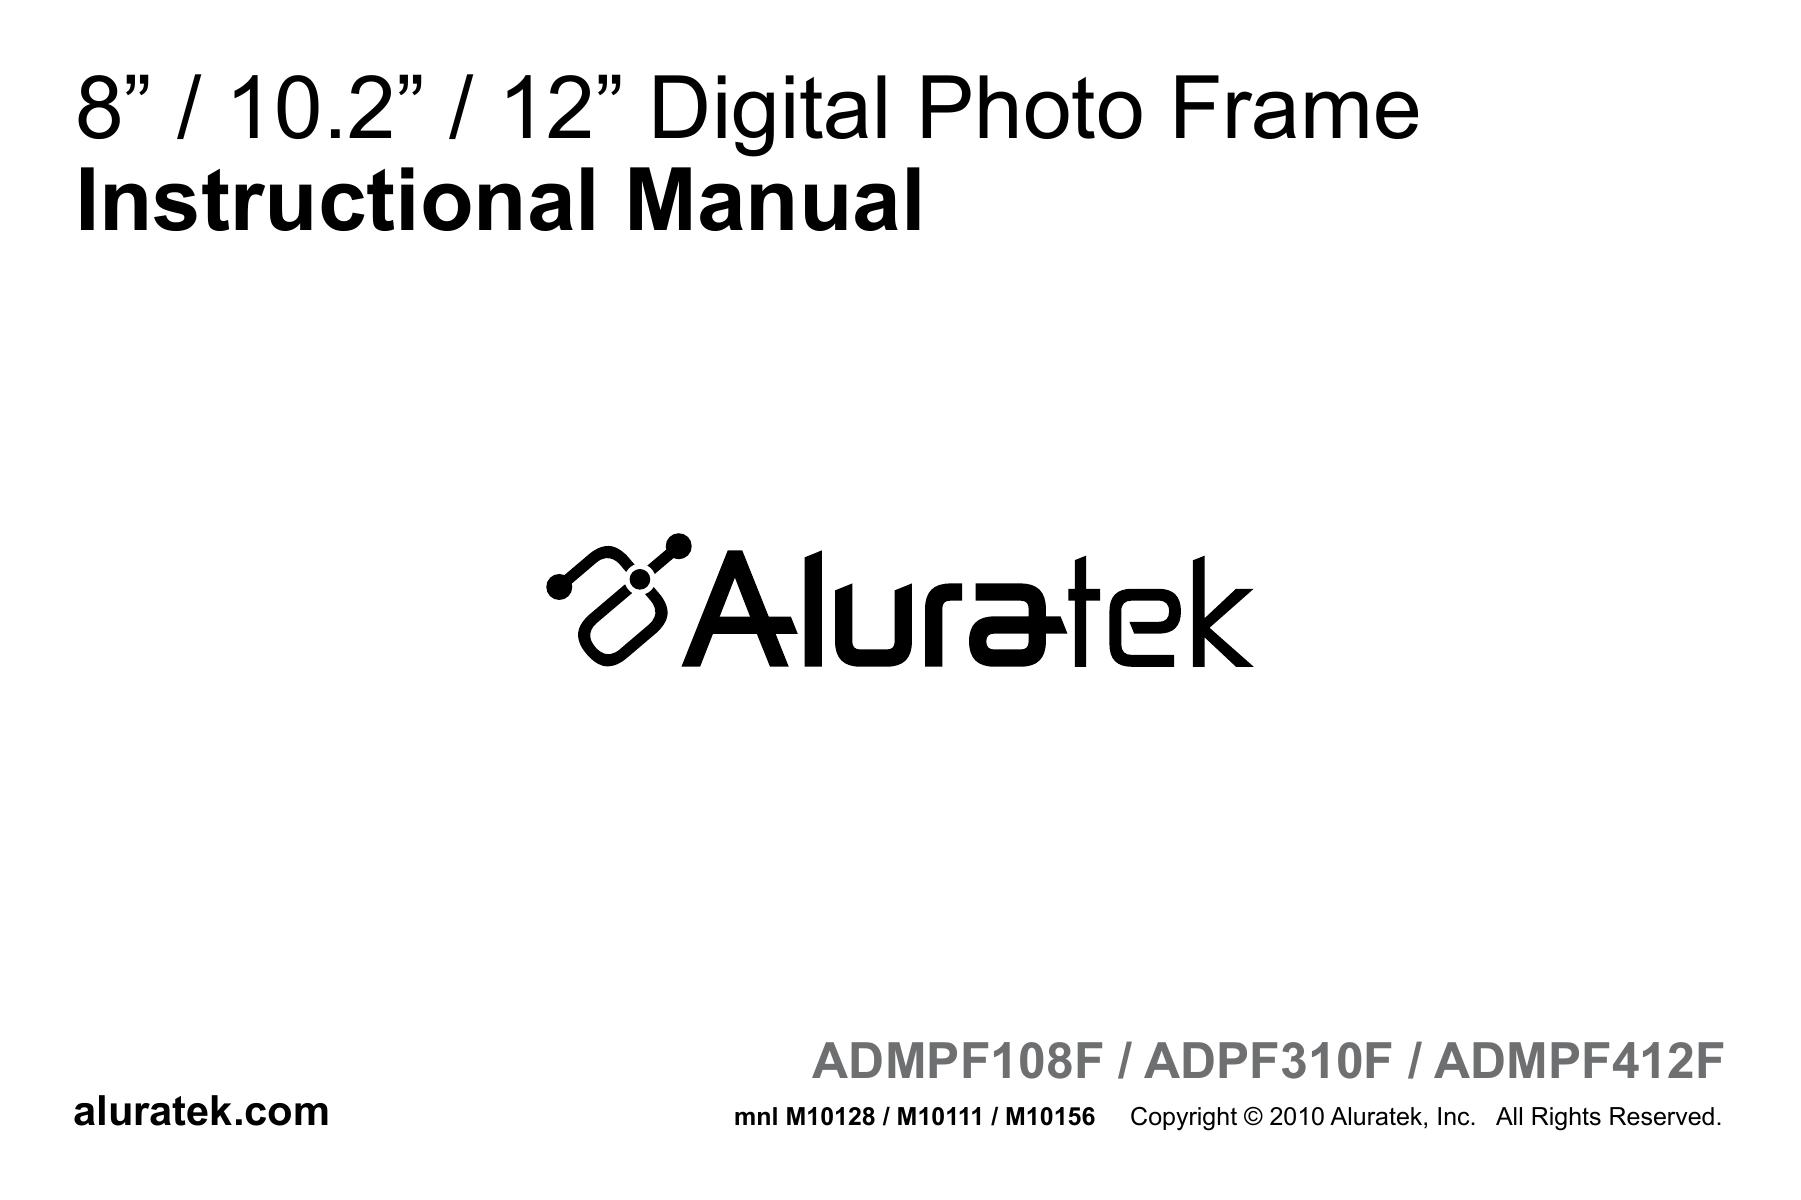 Aluratek ADMPF412F Digital Photo Frame User Manual